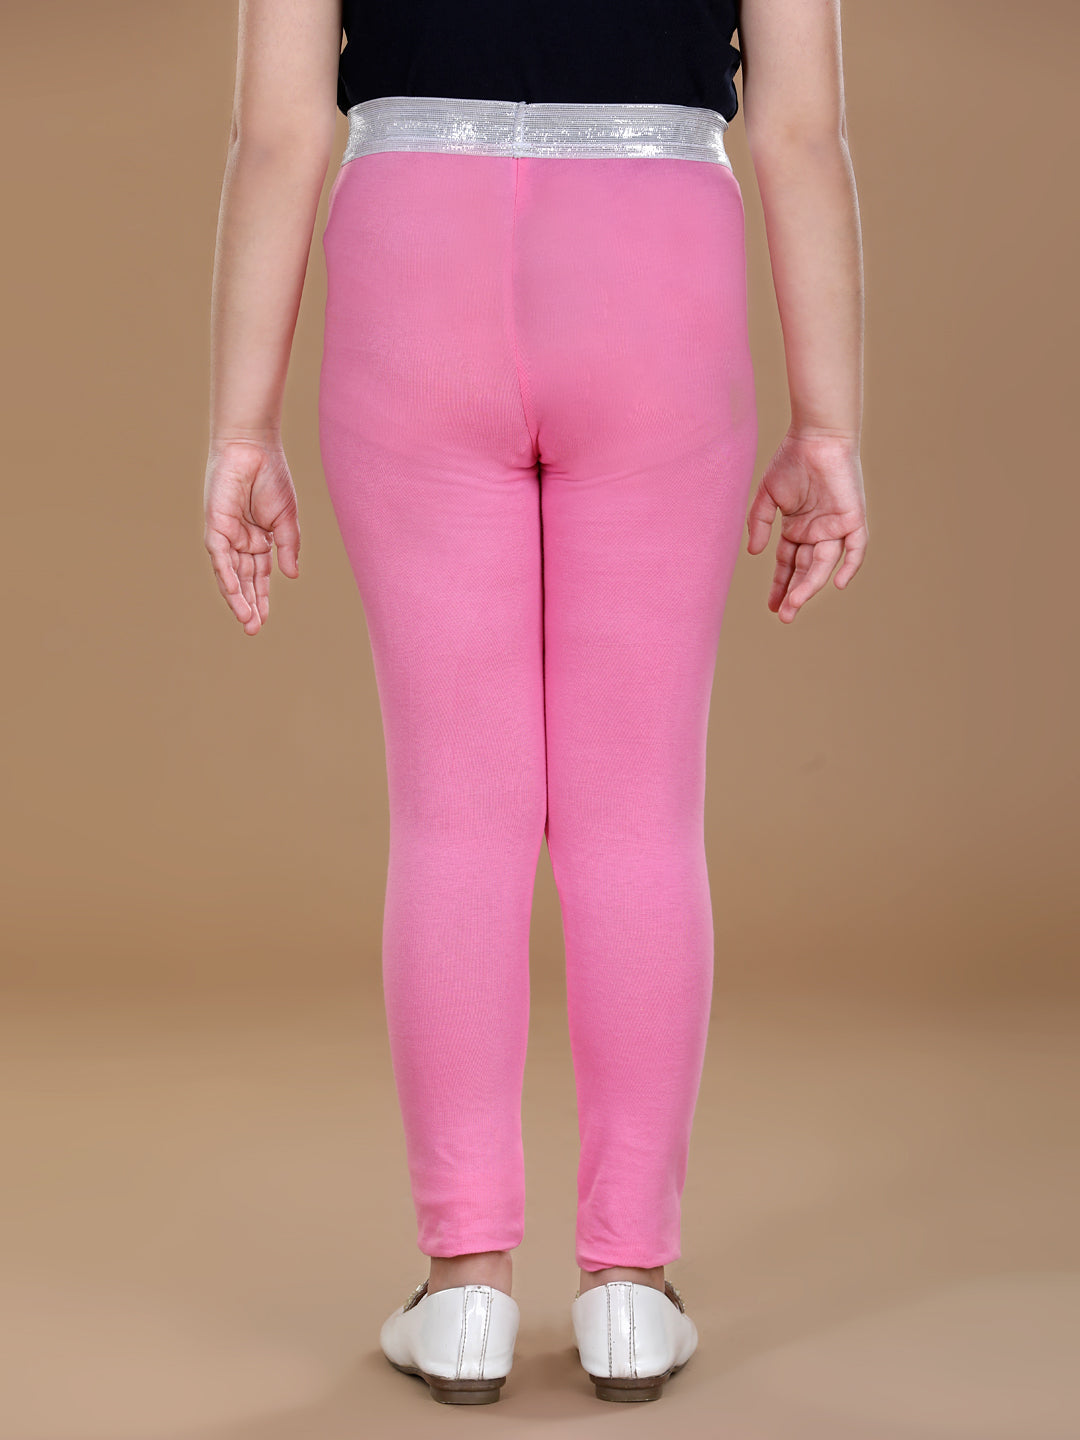 Girls Silver Elasticated Waistband & Star Printed Pink Leggings